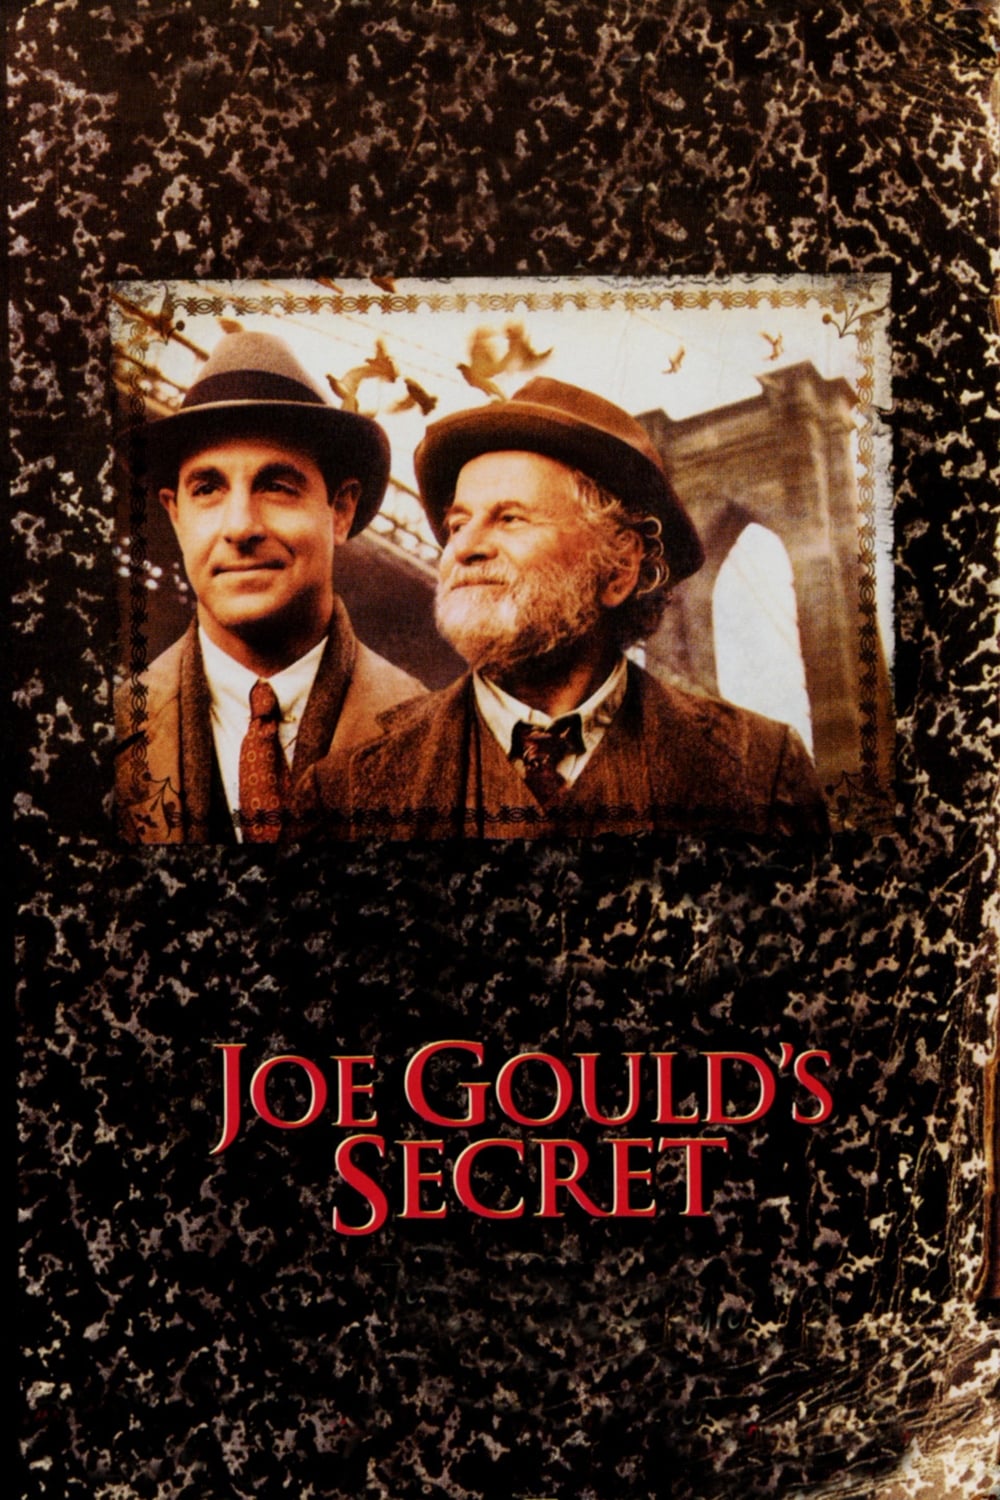 Joe Gould's Secret (2000)